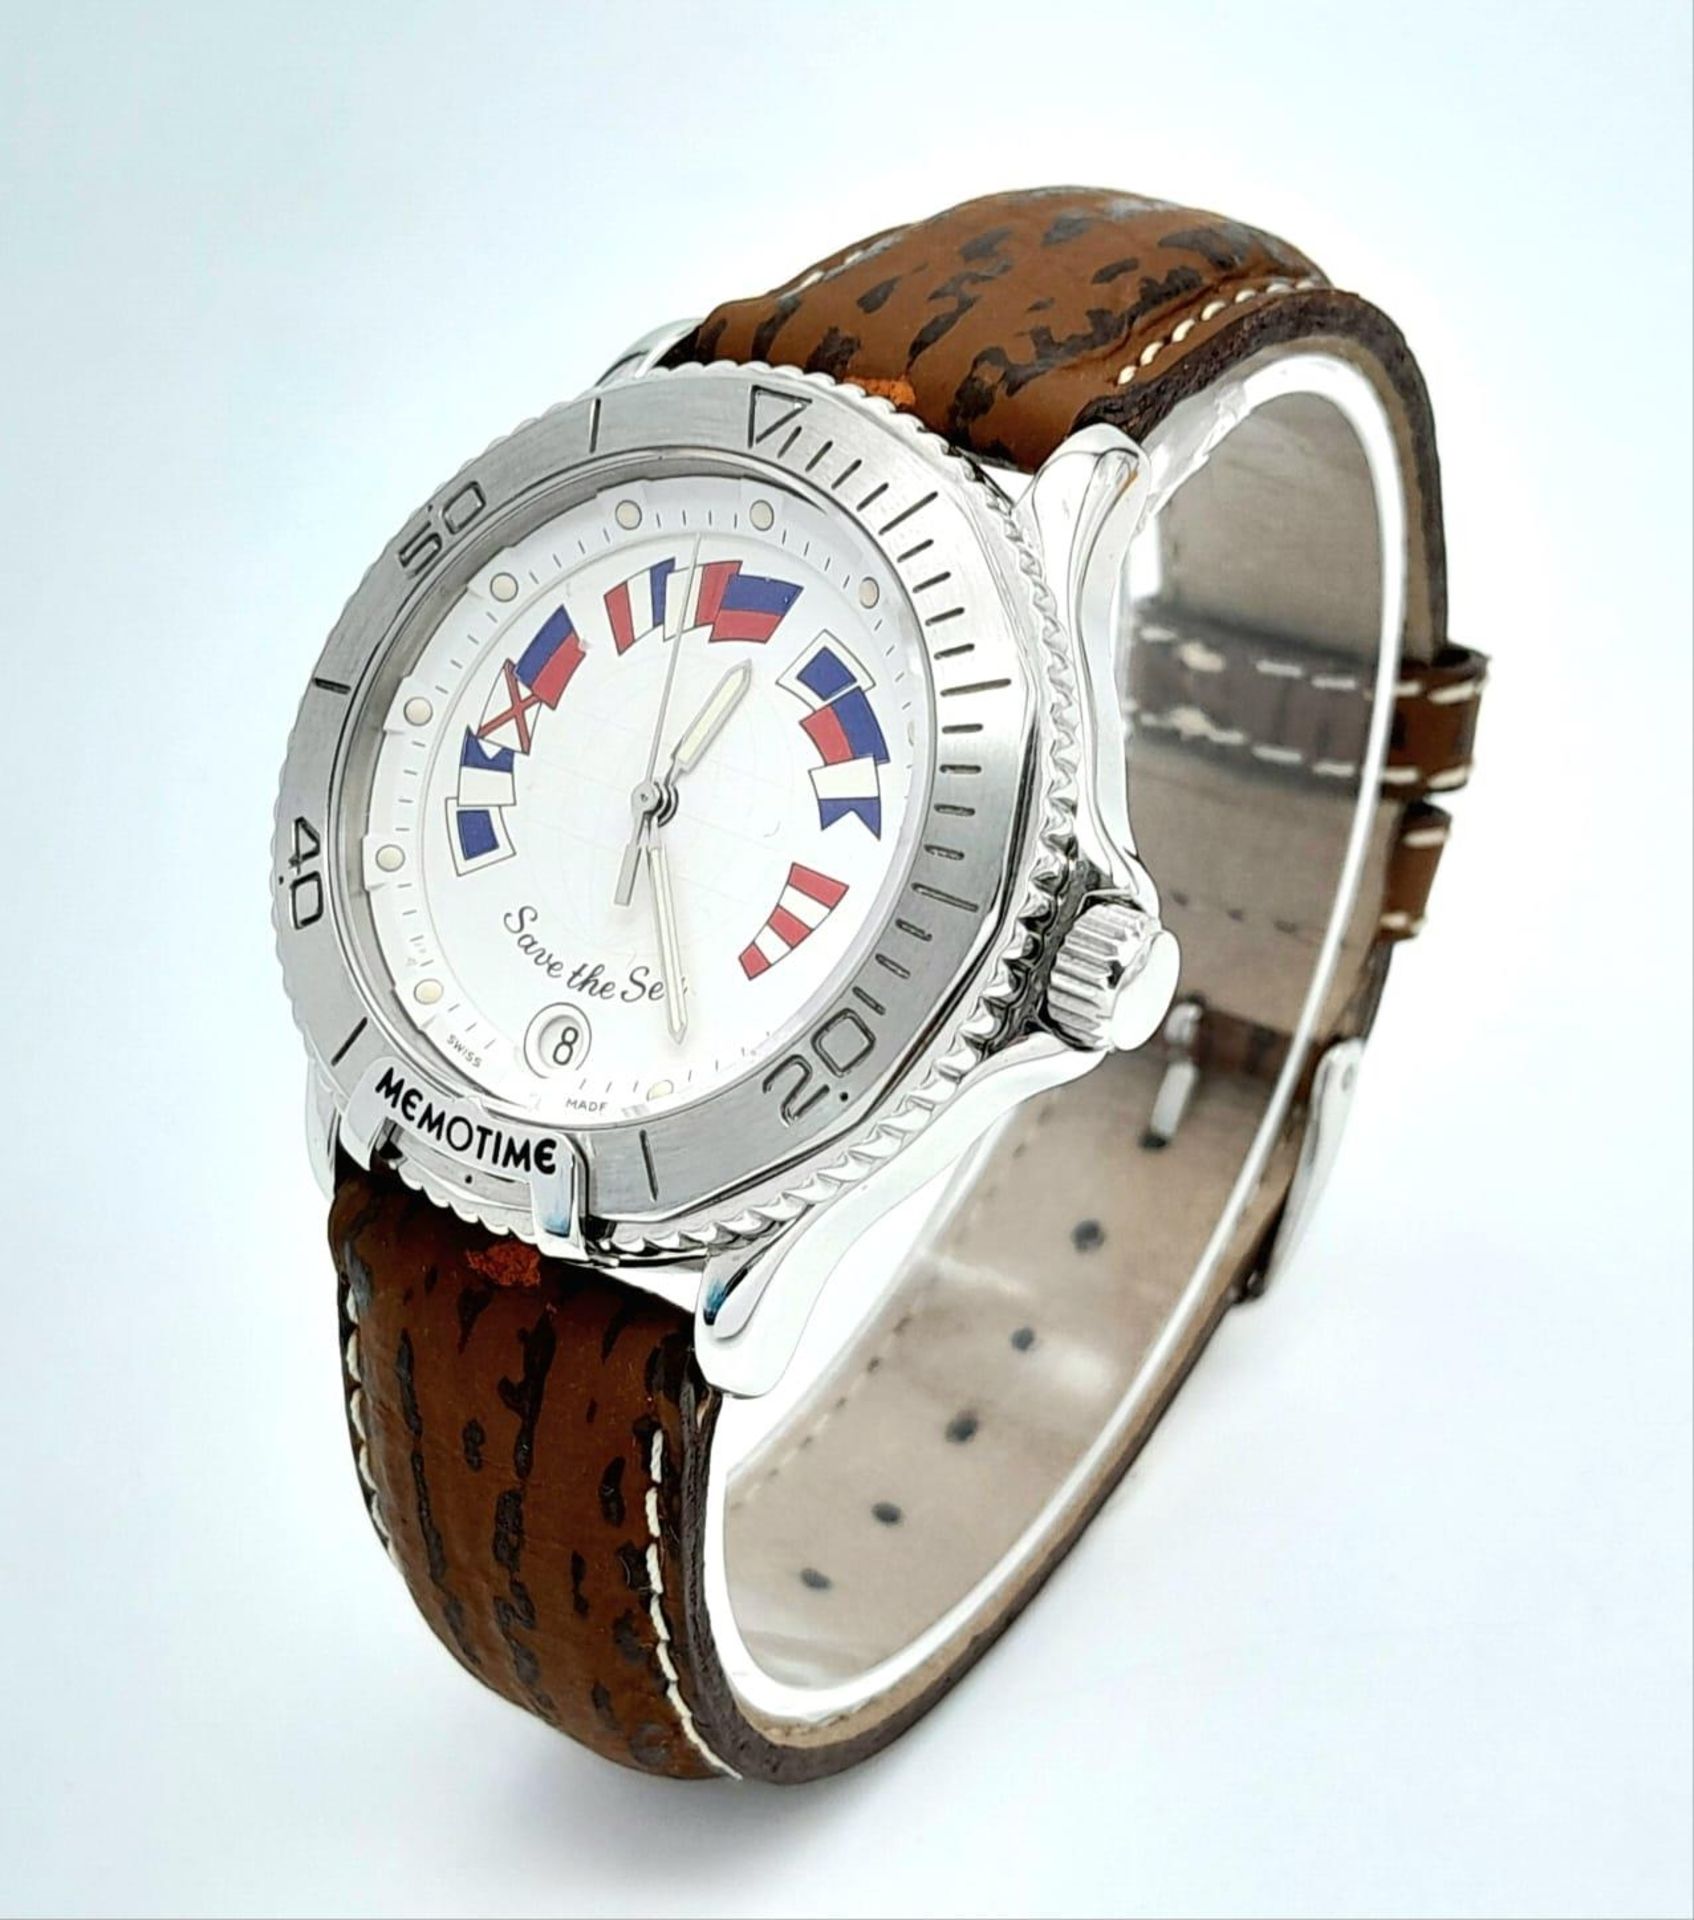 A Corum Memotime - Save the Sea Limited Edition Quartz Unisex Watch. Brown leather strap. - Bild 2 aus 7